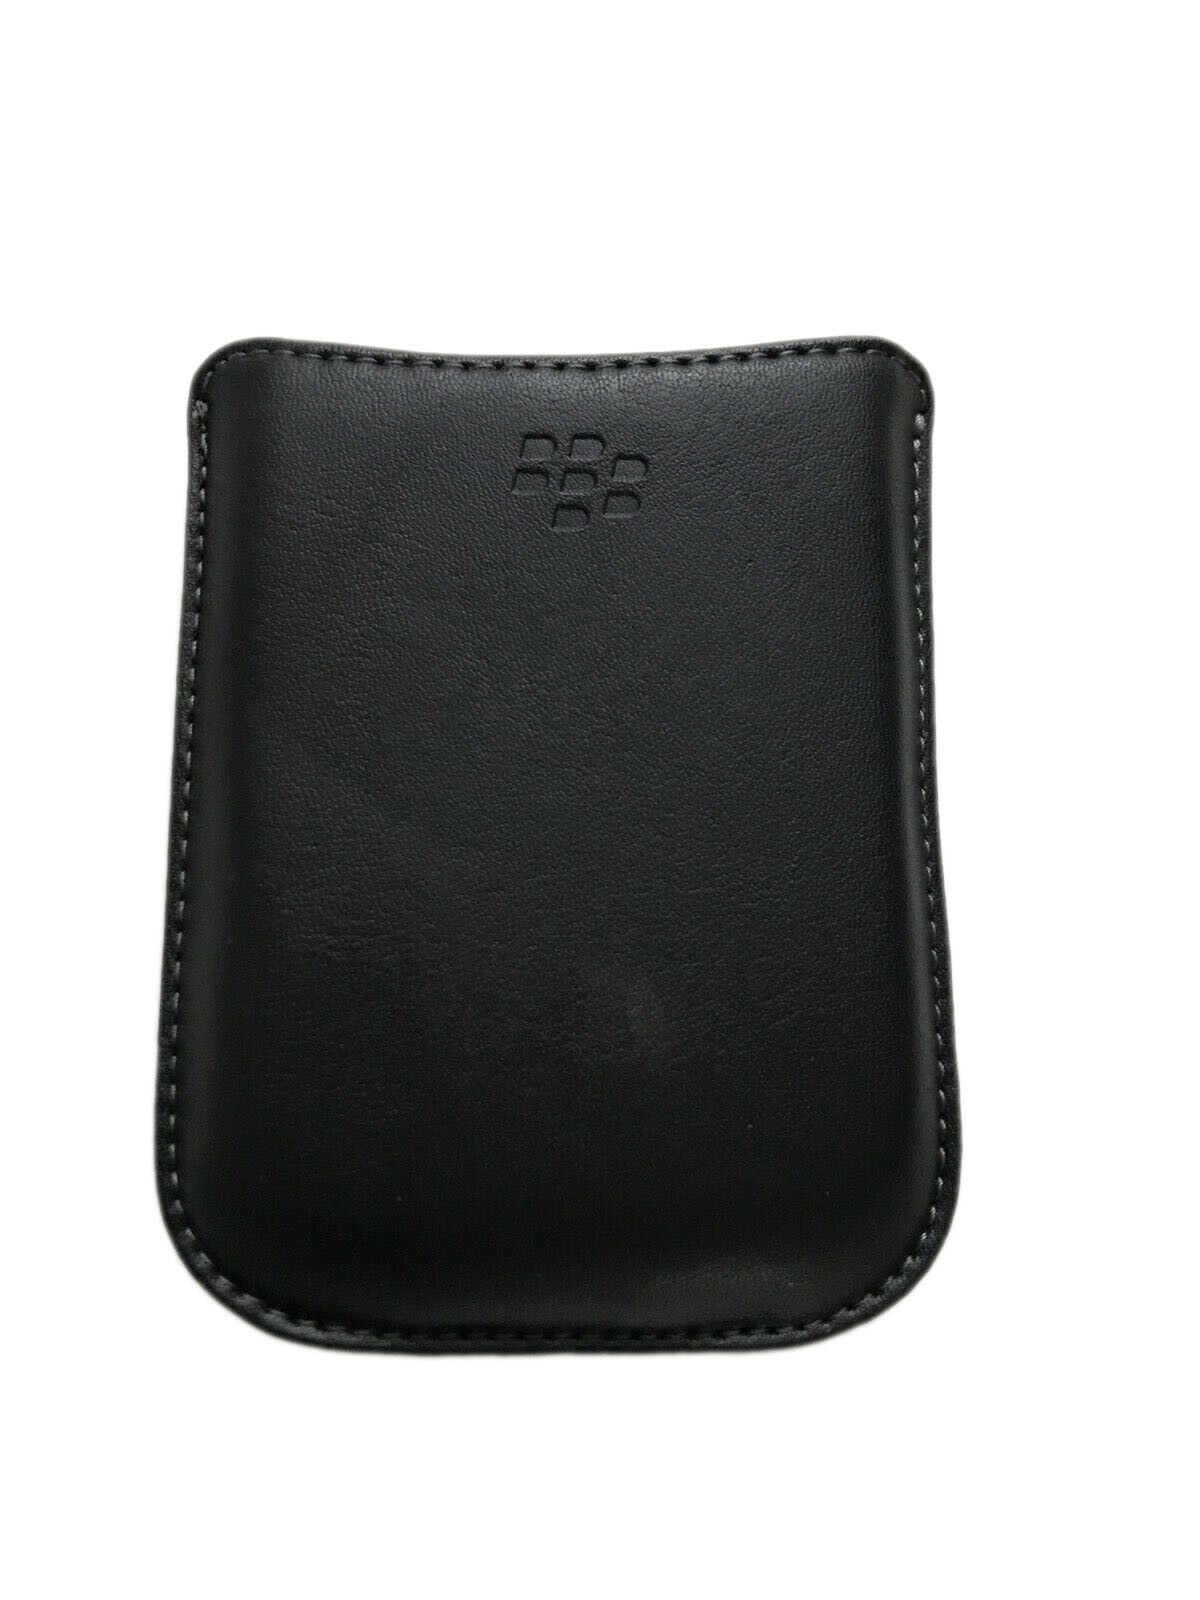 Genuine Leather Pocket Case HDW-19815-001 Fits BlackBerry STORM 2 9500 9520 9530 - $7.24